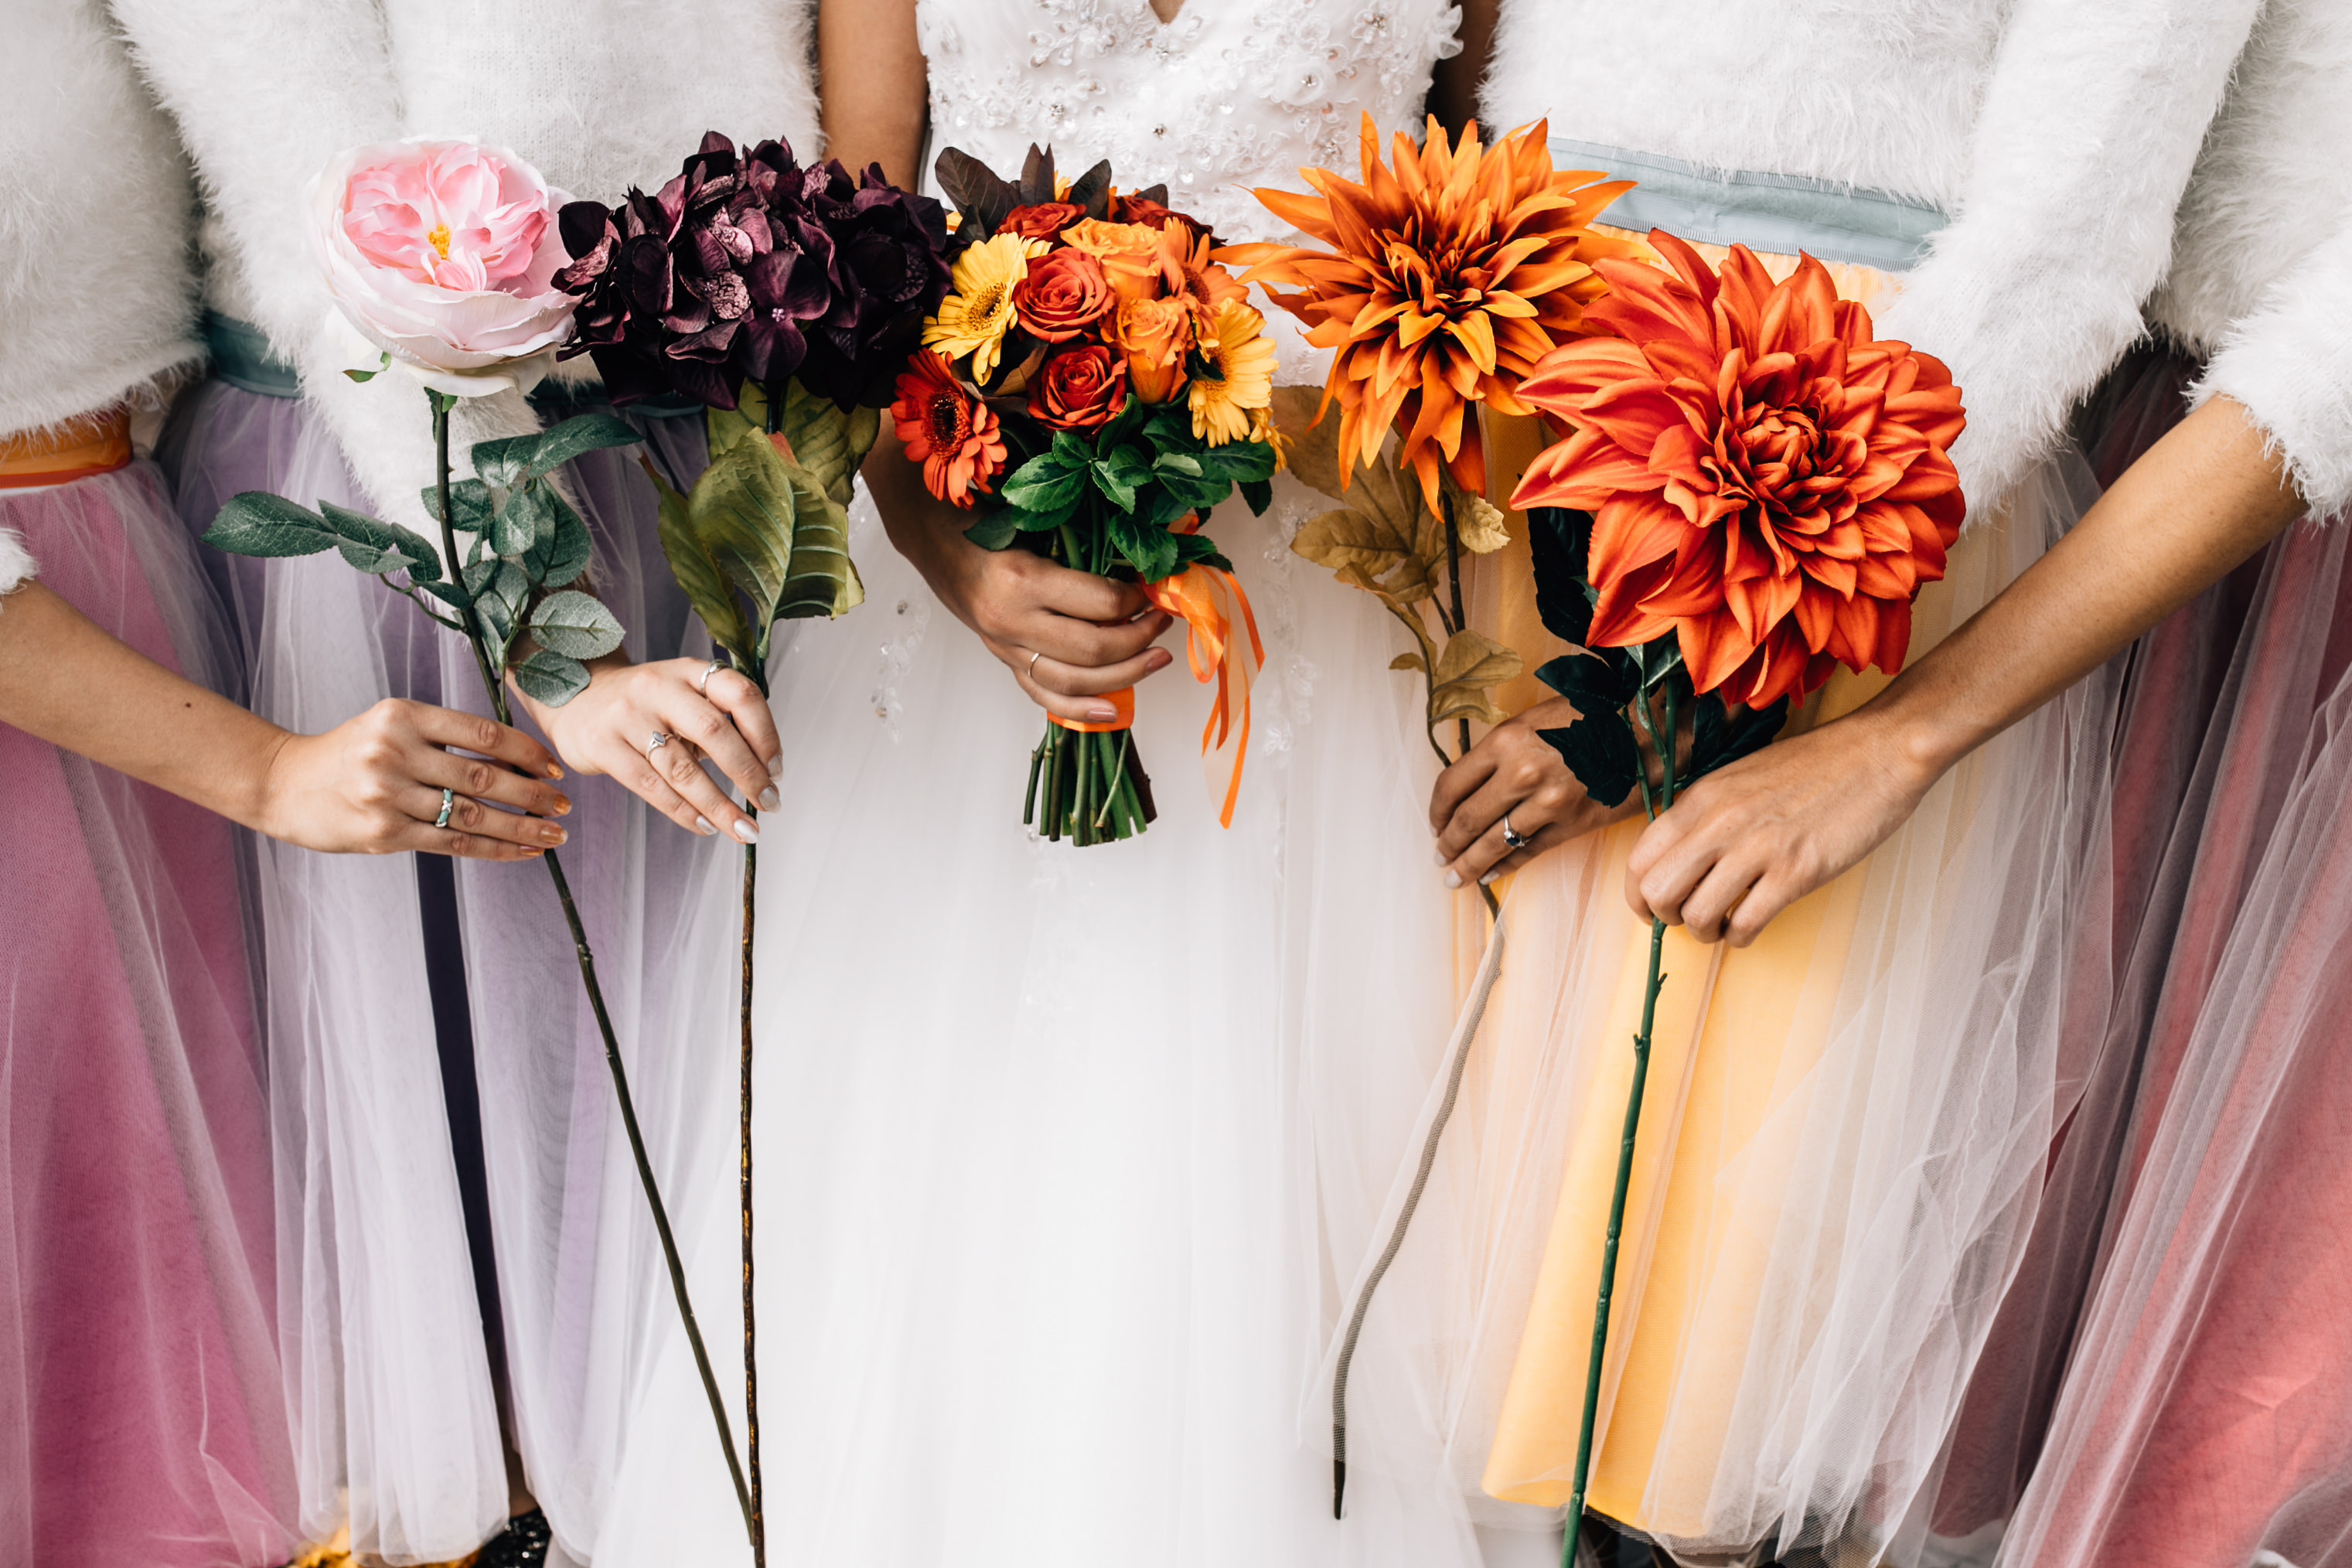 fun quirky london wedding photographer autumun bridesmaids